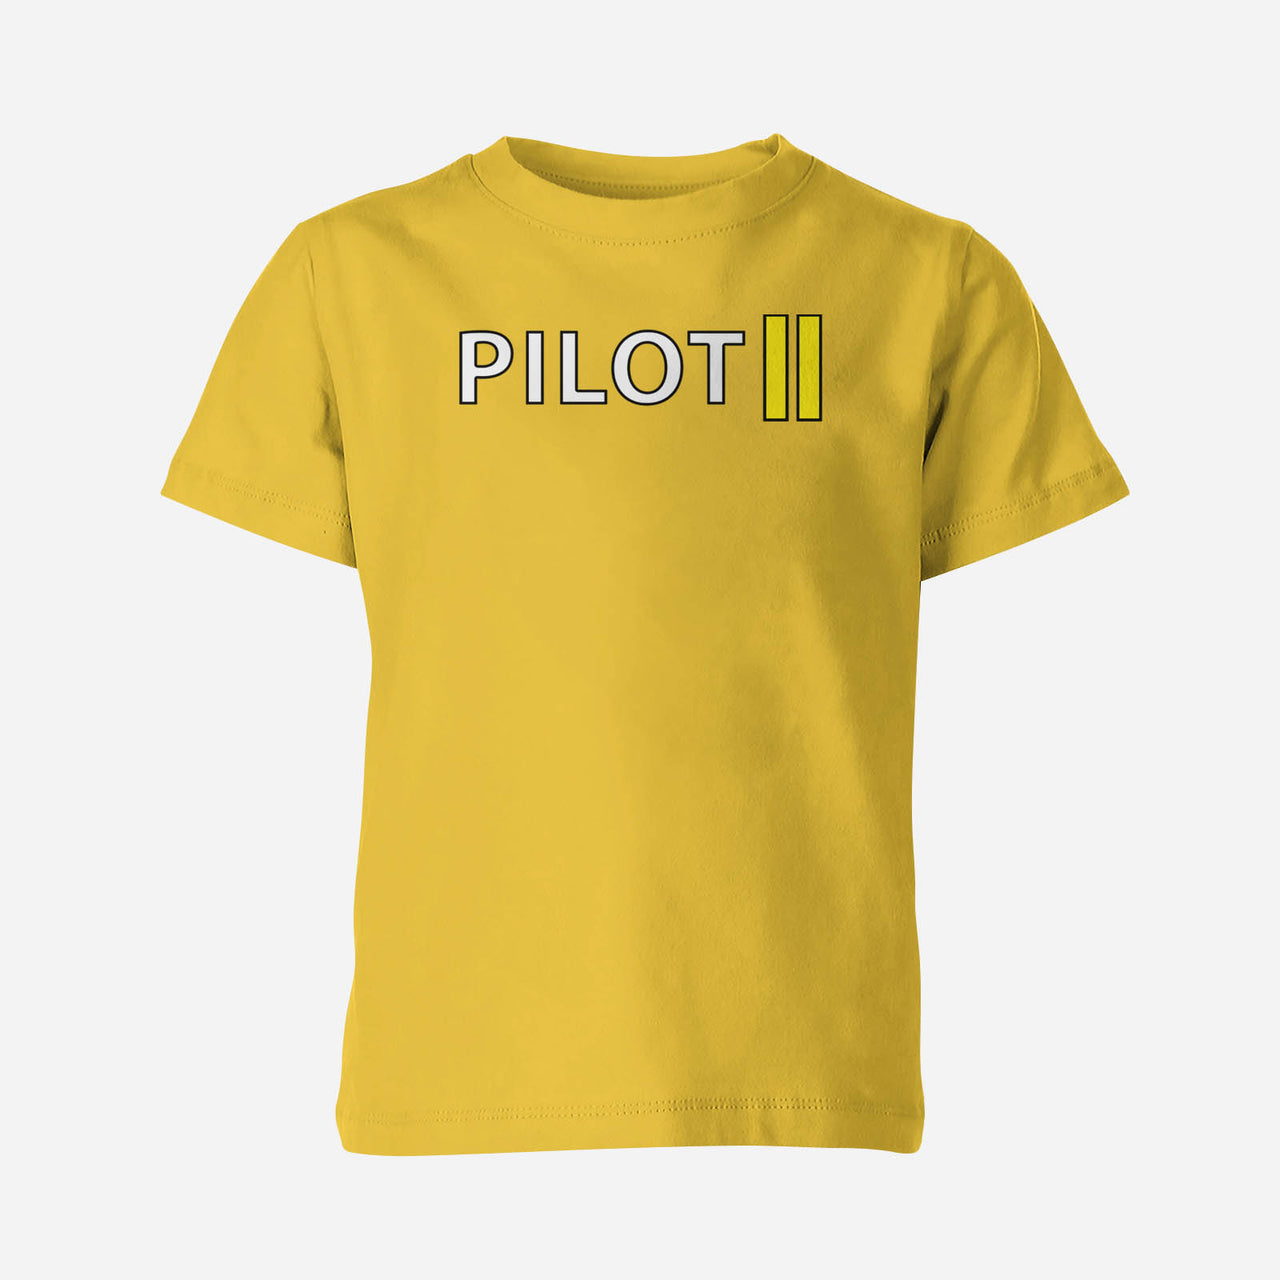 Pilot & Stripes (2 Lines) Designed Children T-Shirts